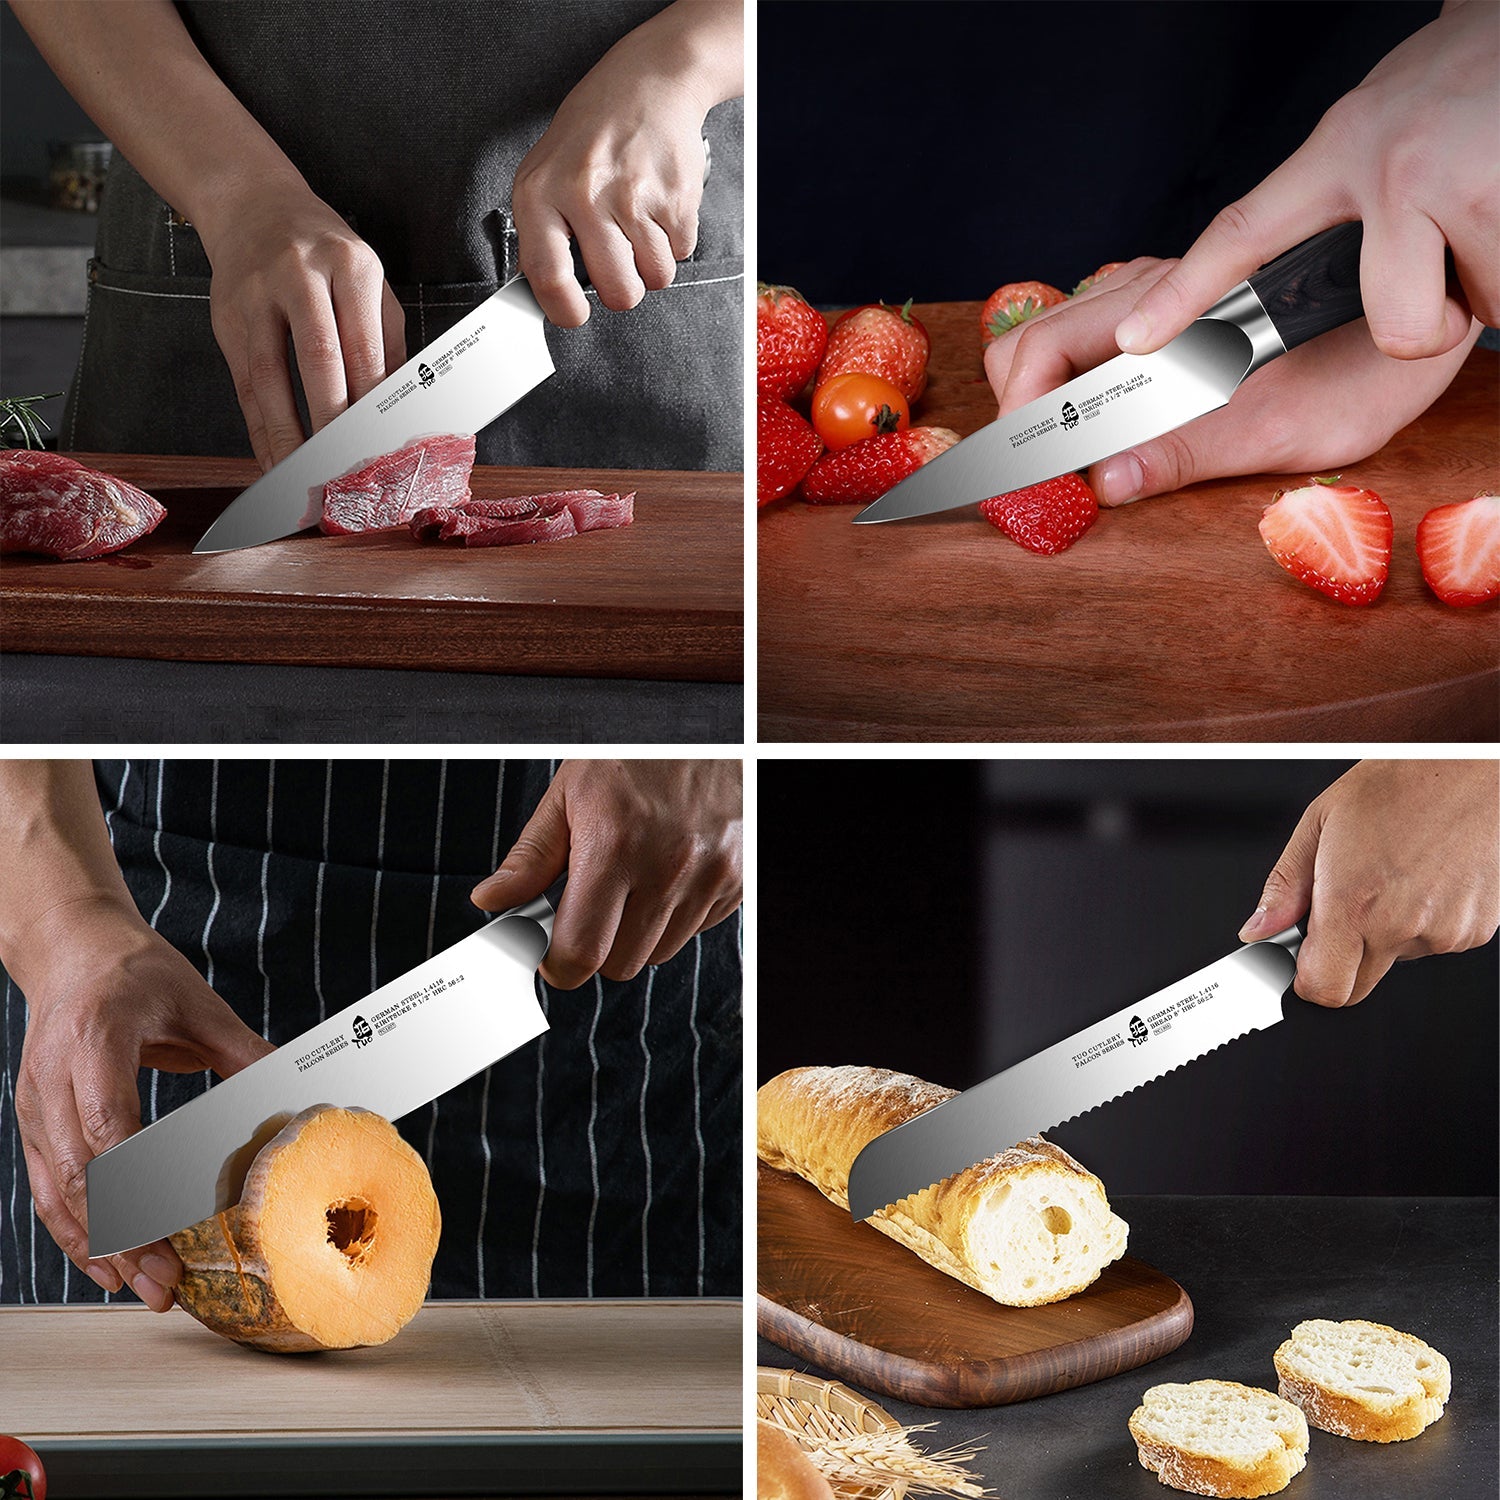 Tuo Cutlery - TC1314 - Falcon S - 17-Pcs Kitchen Knife Set